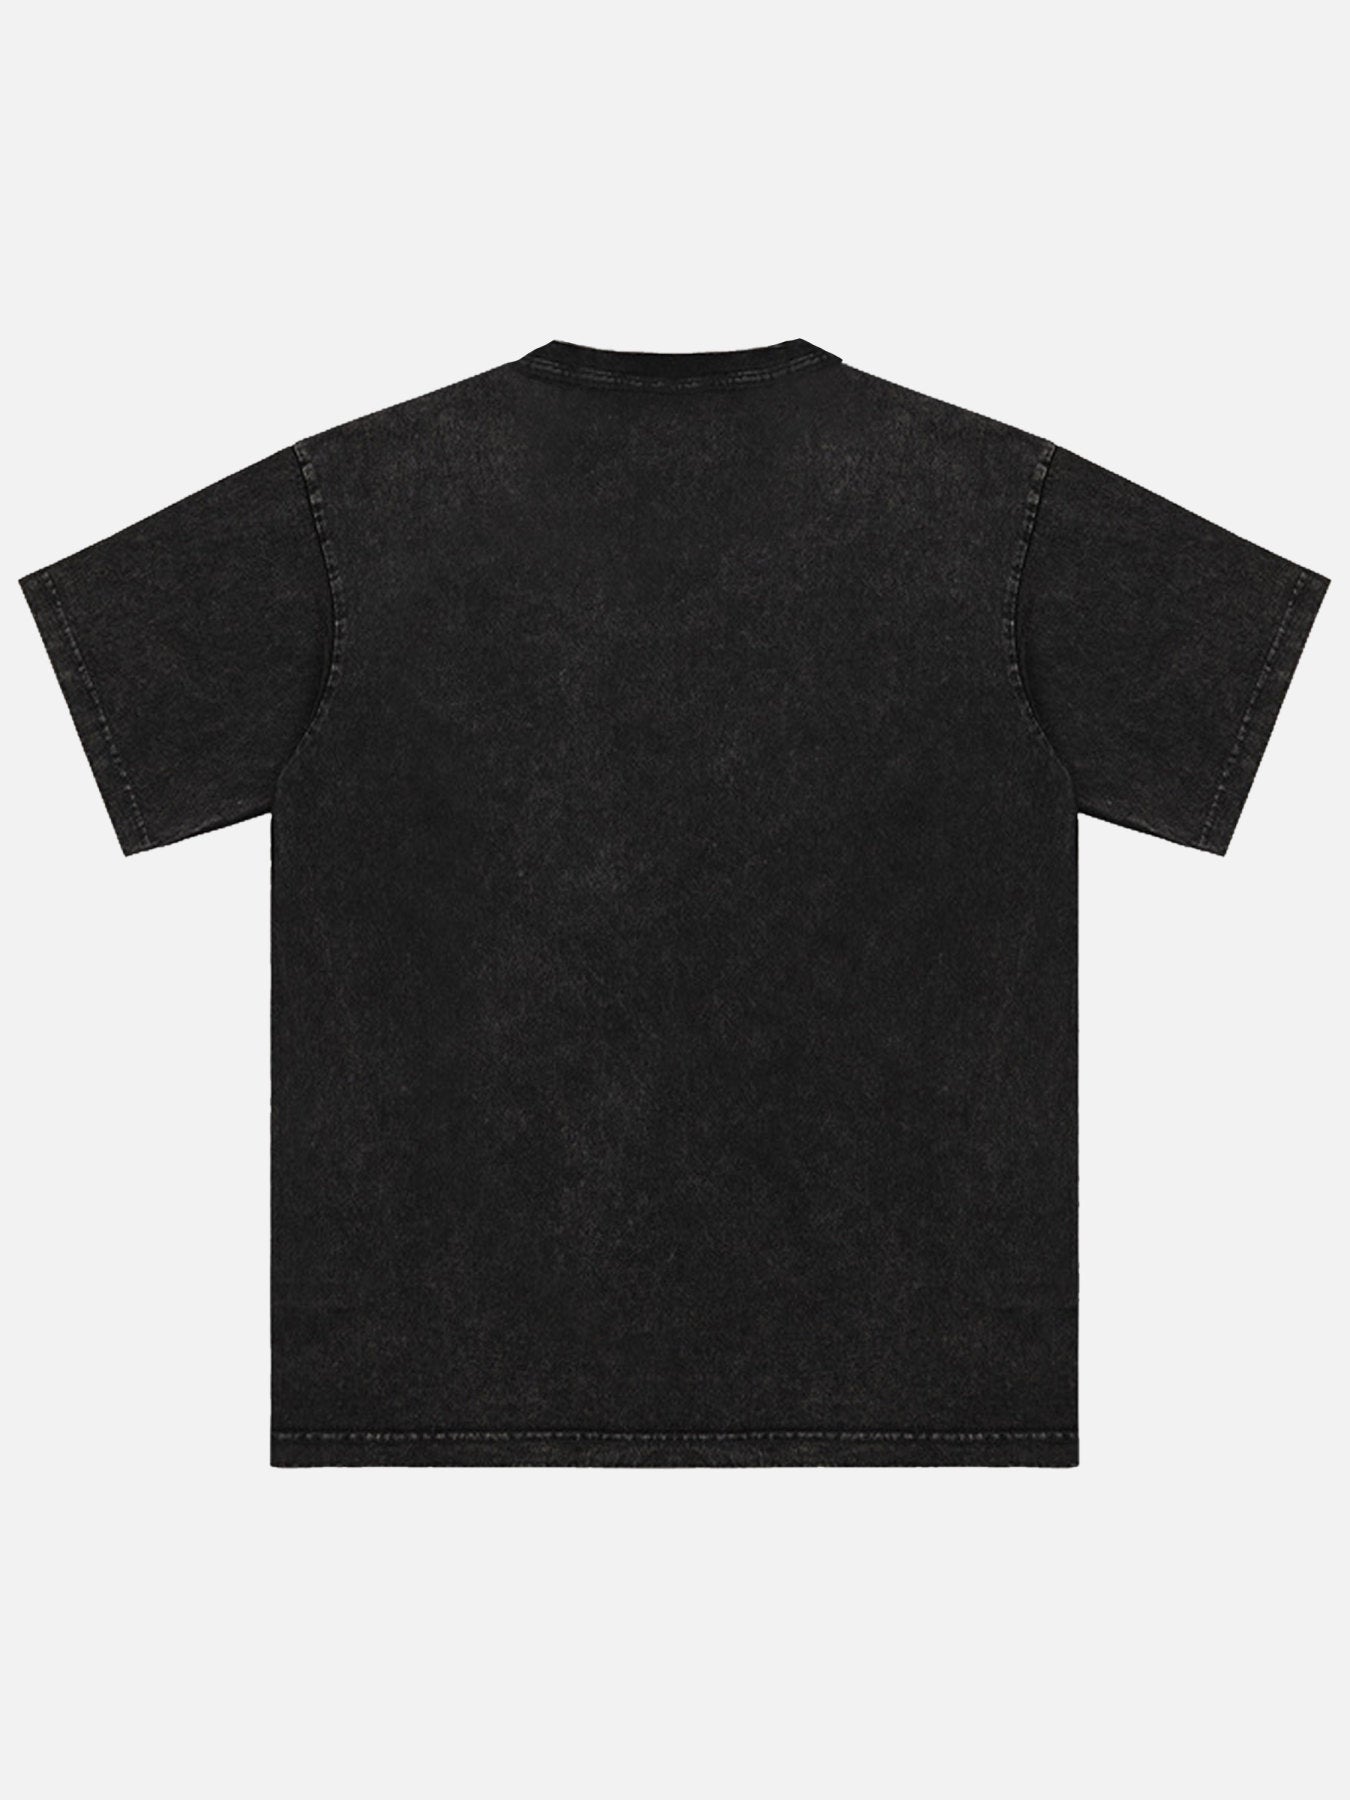 The Supermade Rap Element Print T-Shirt